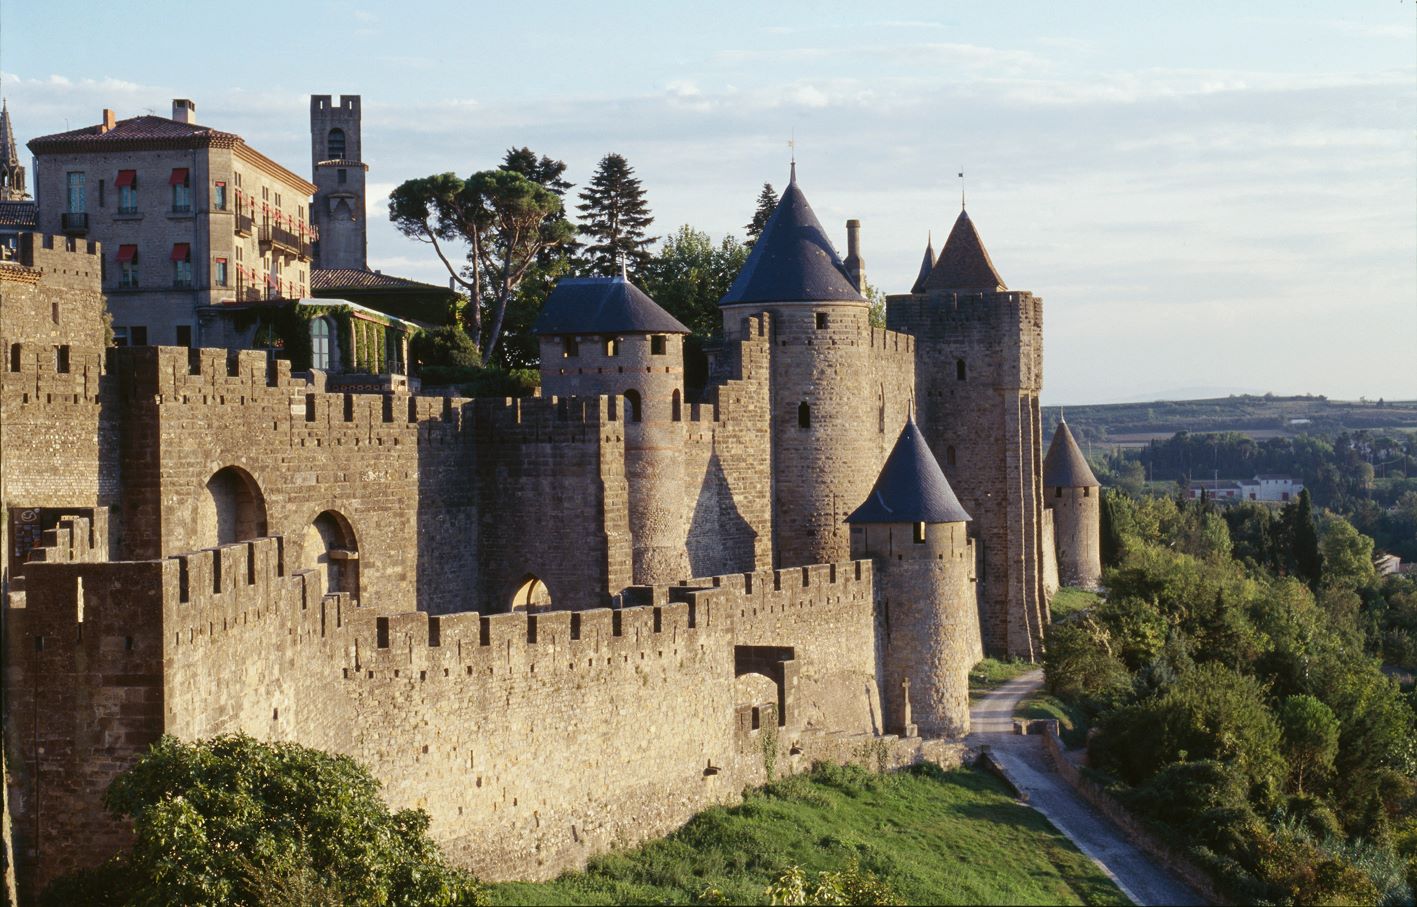 Sul da França : visite Carcassonne e Aigues-Mortes, dois monumentos medievais do Centre de Monuments Nationaux